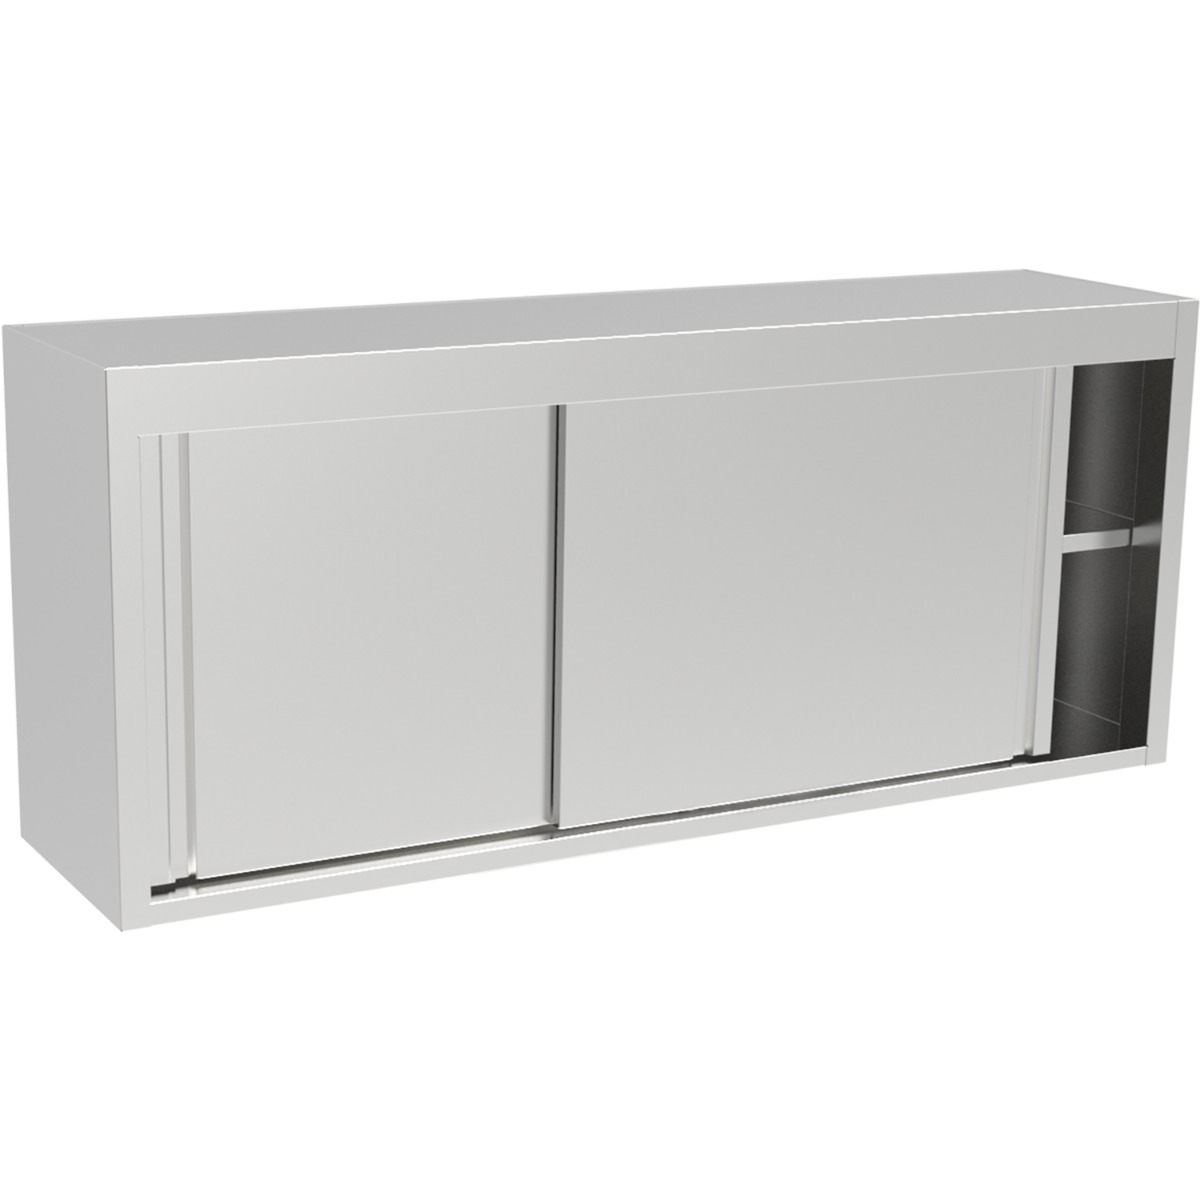 INOMAK Wall mounted storage cupboard 1900mm Wide - ET319A